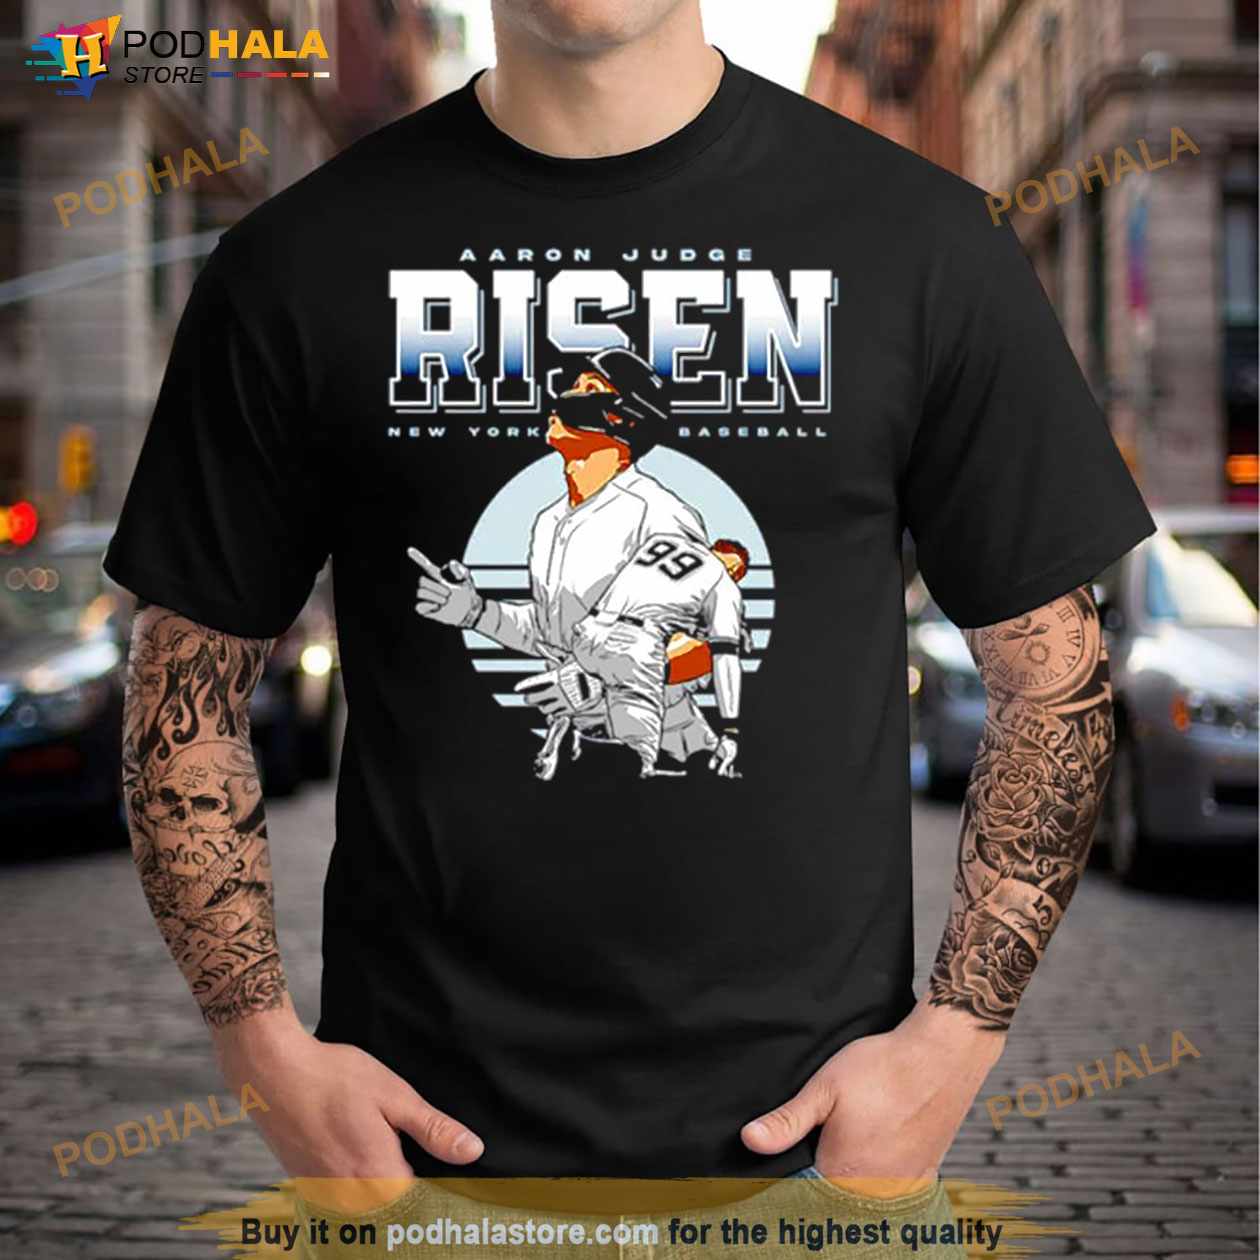 Aaron Judge Risen New York baseball Shirt - Bring Your Ideas